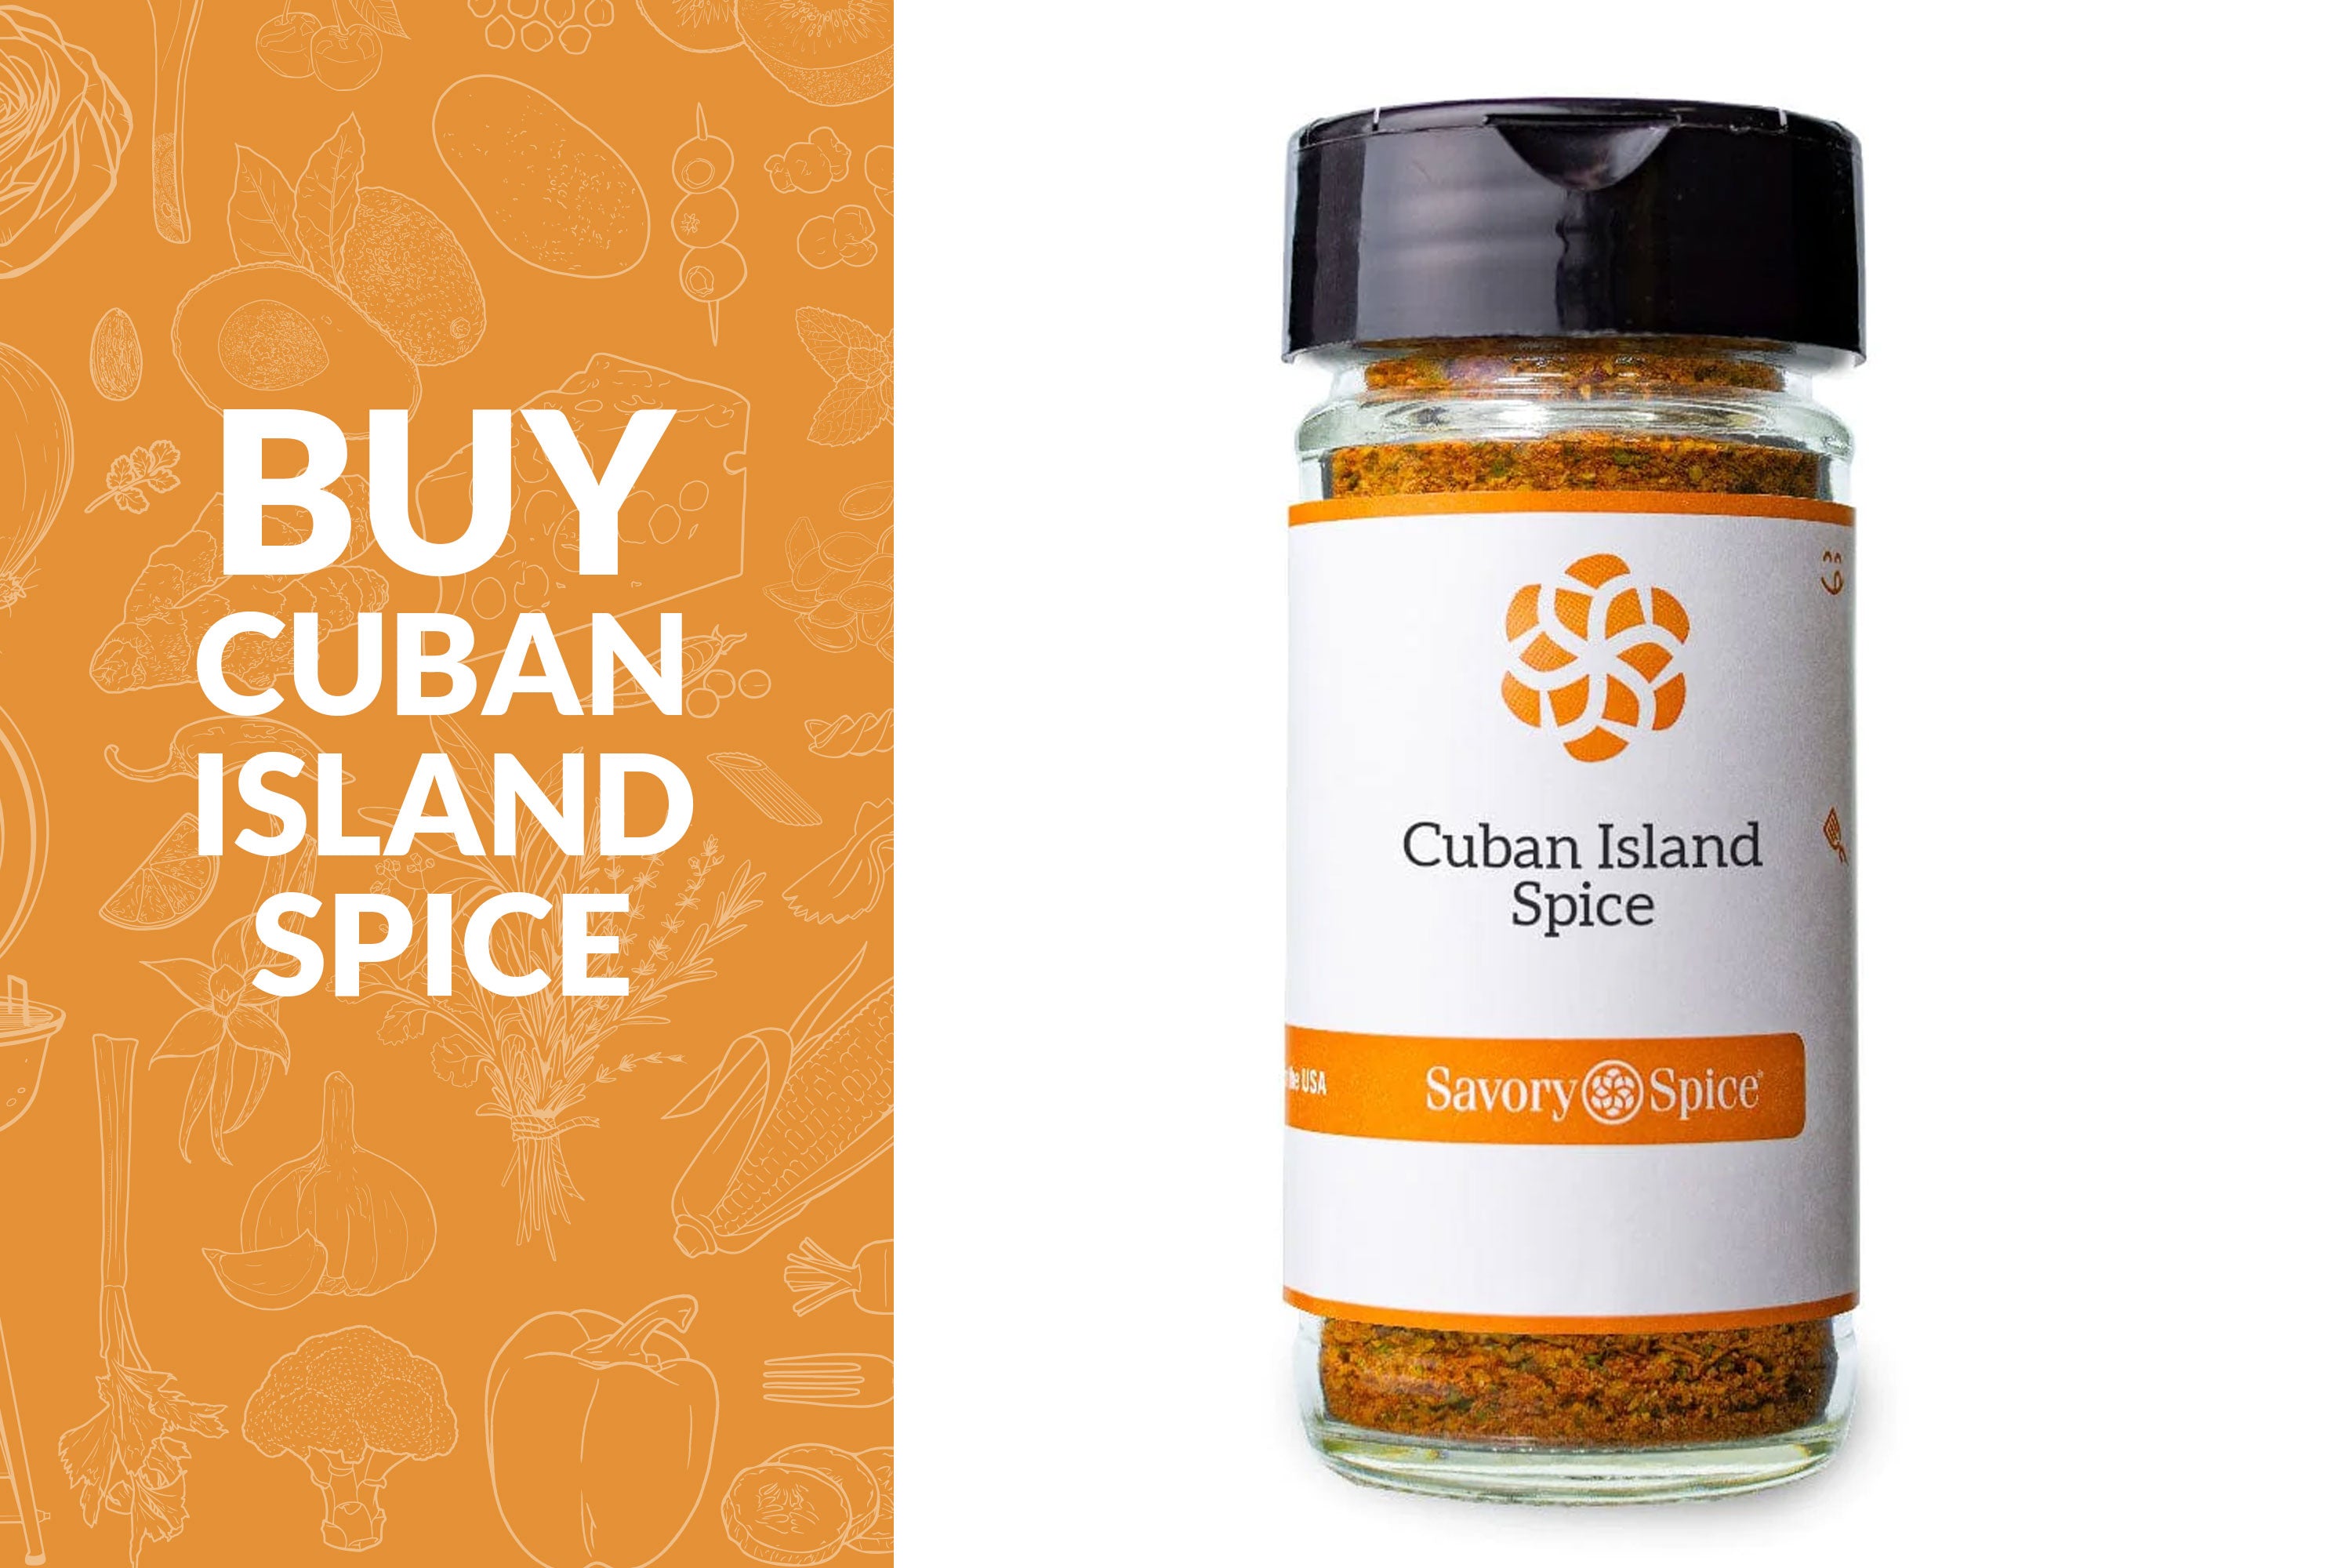 Buy Cuban Island Spice on left with jar of Cuban Island Spice on right